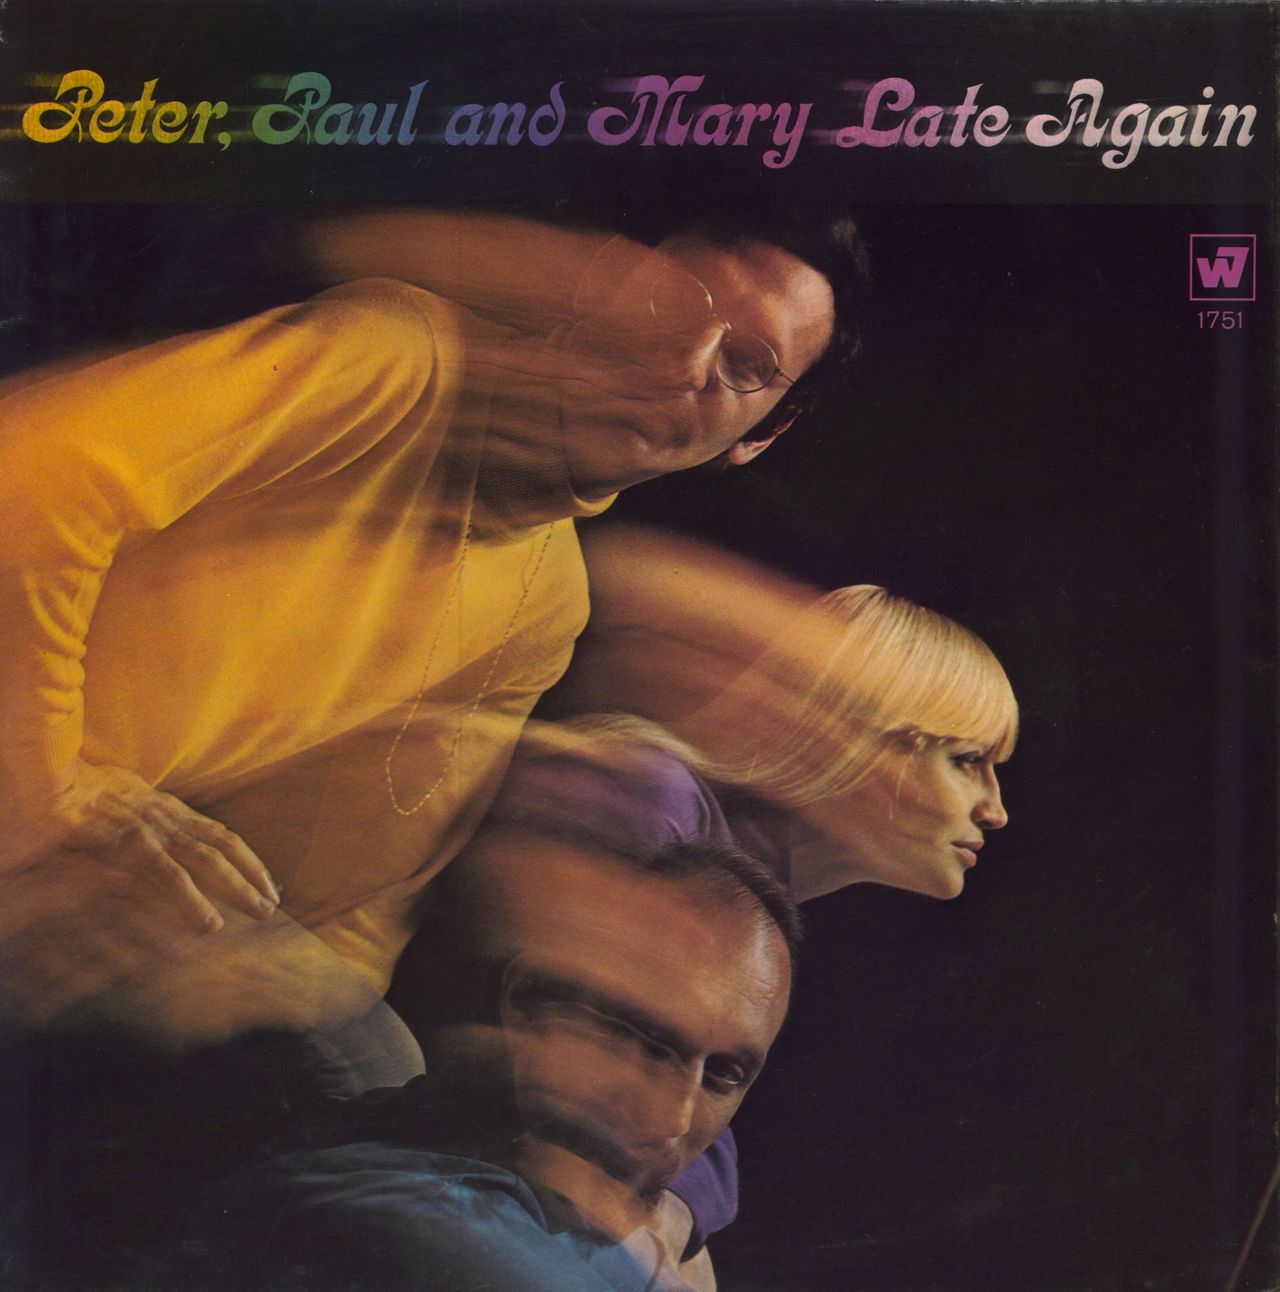 Peter Paul & Mary Late Again UK vinyl LP album (LP record) WS1751